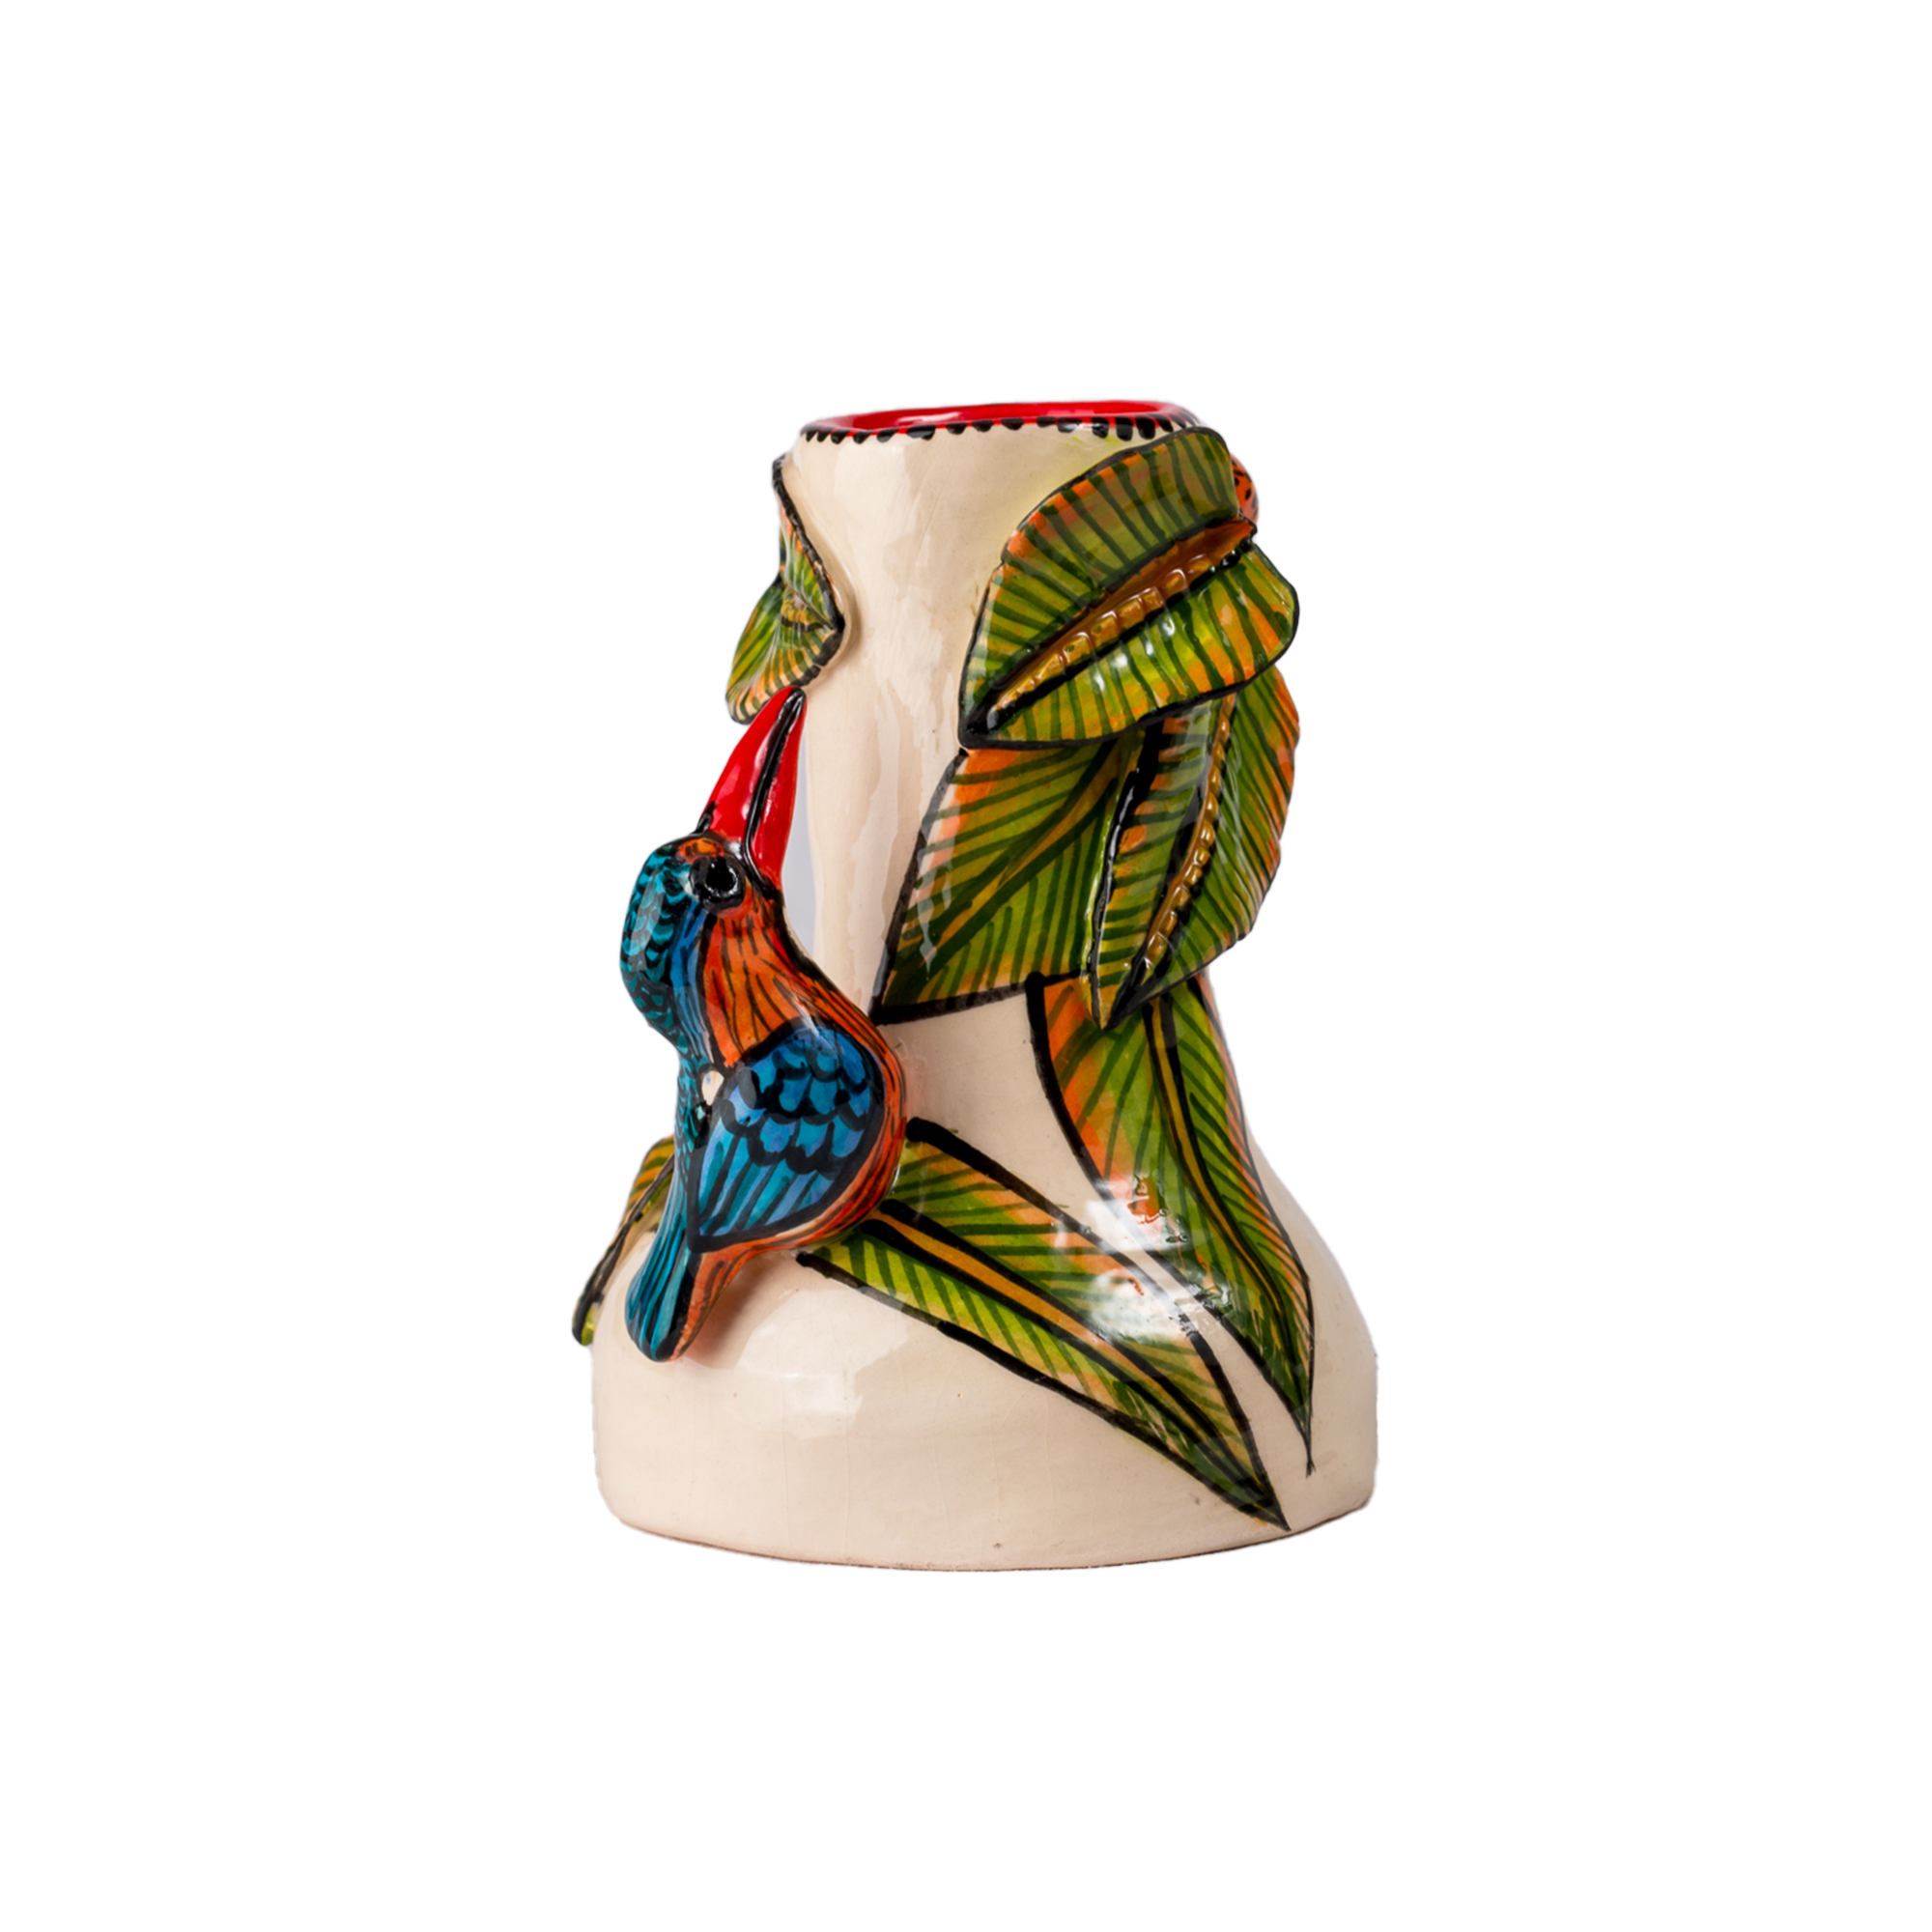 3D Ceramic Small Bird Candle Holder